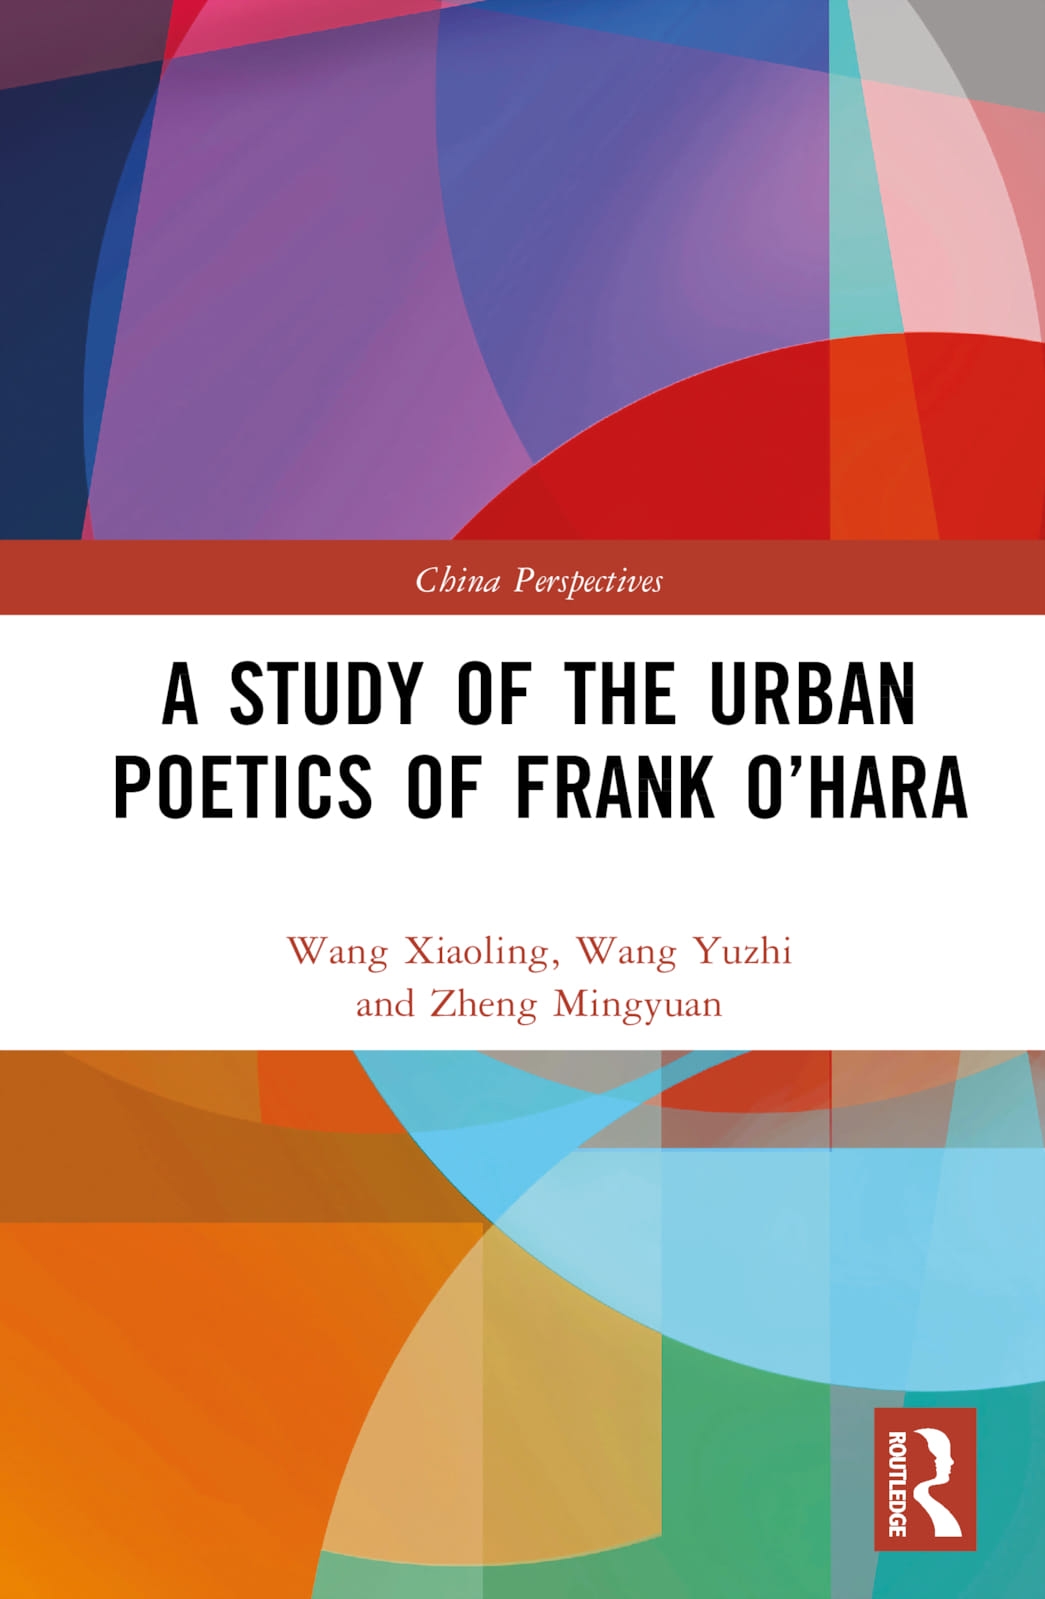 A Study of the Urban Poetics of Frank O’Hara